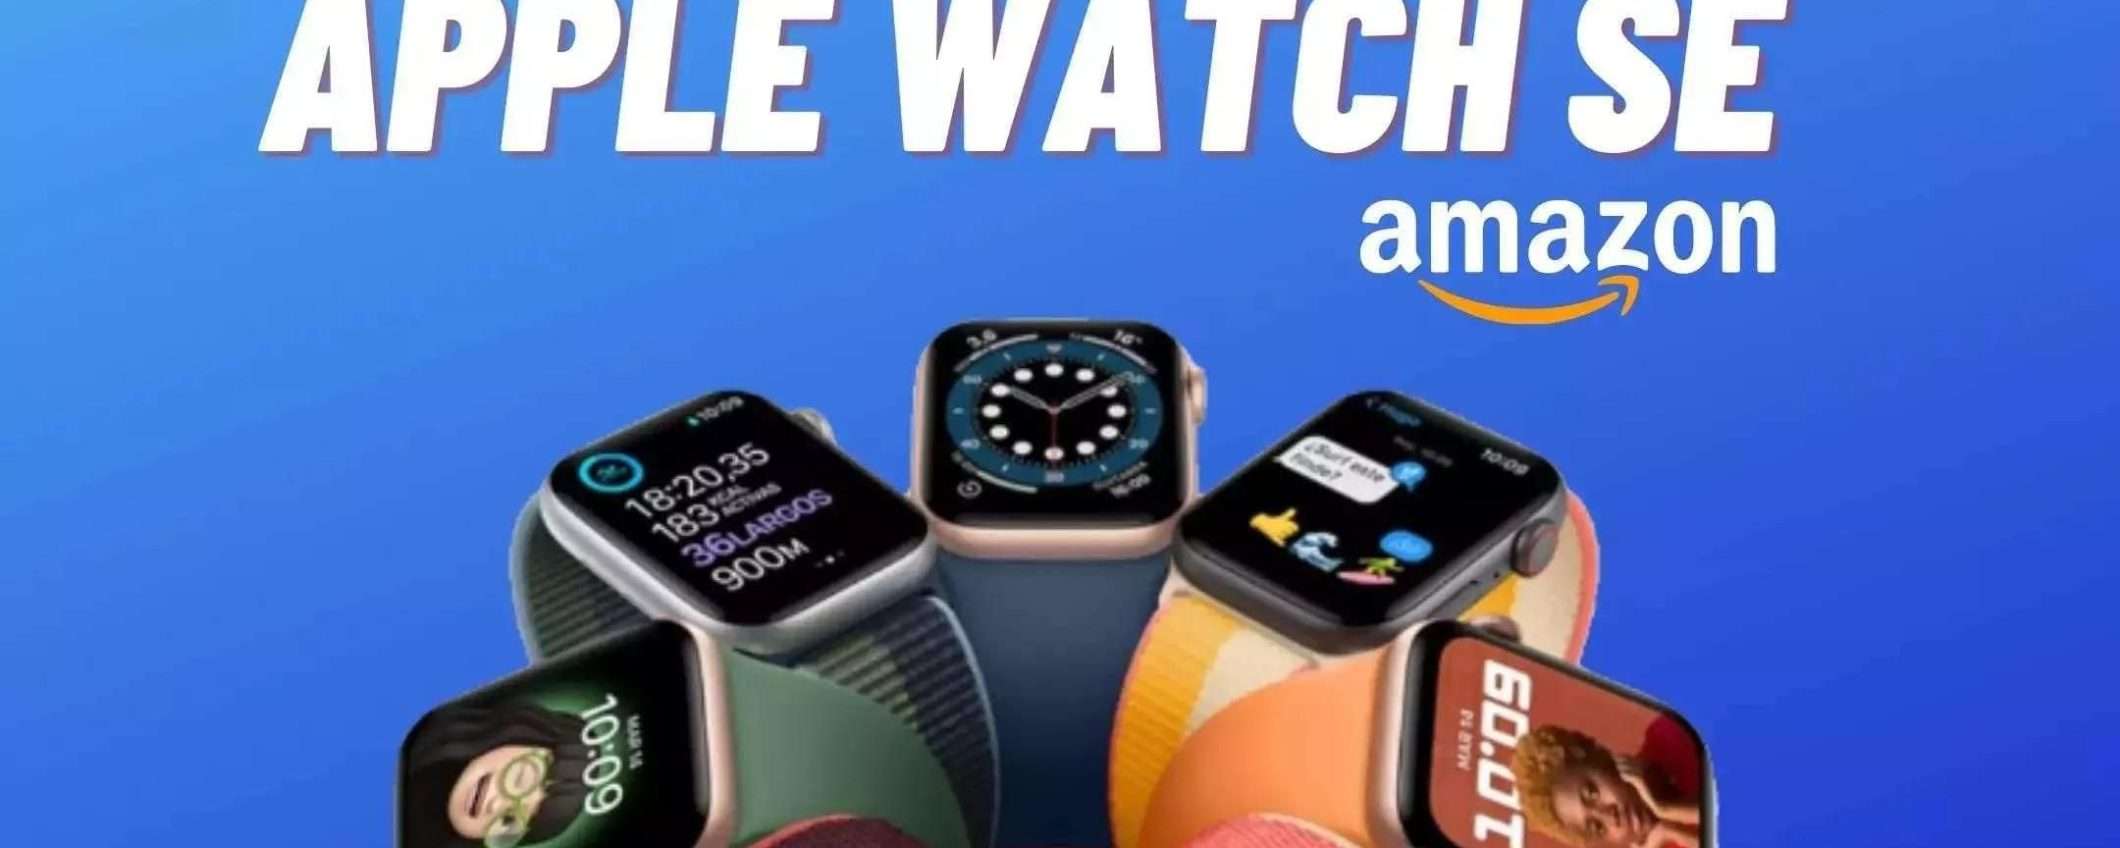 Apple Watch SE (2020) 44 mm + Cellular: meno di 300€ su Amazon